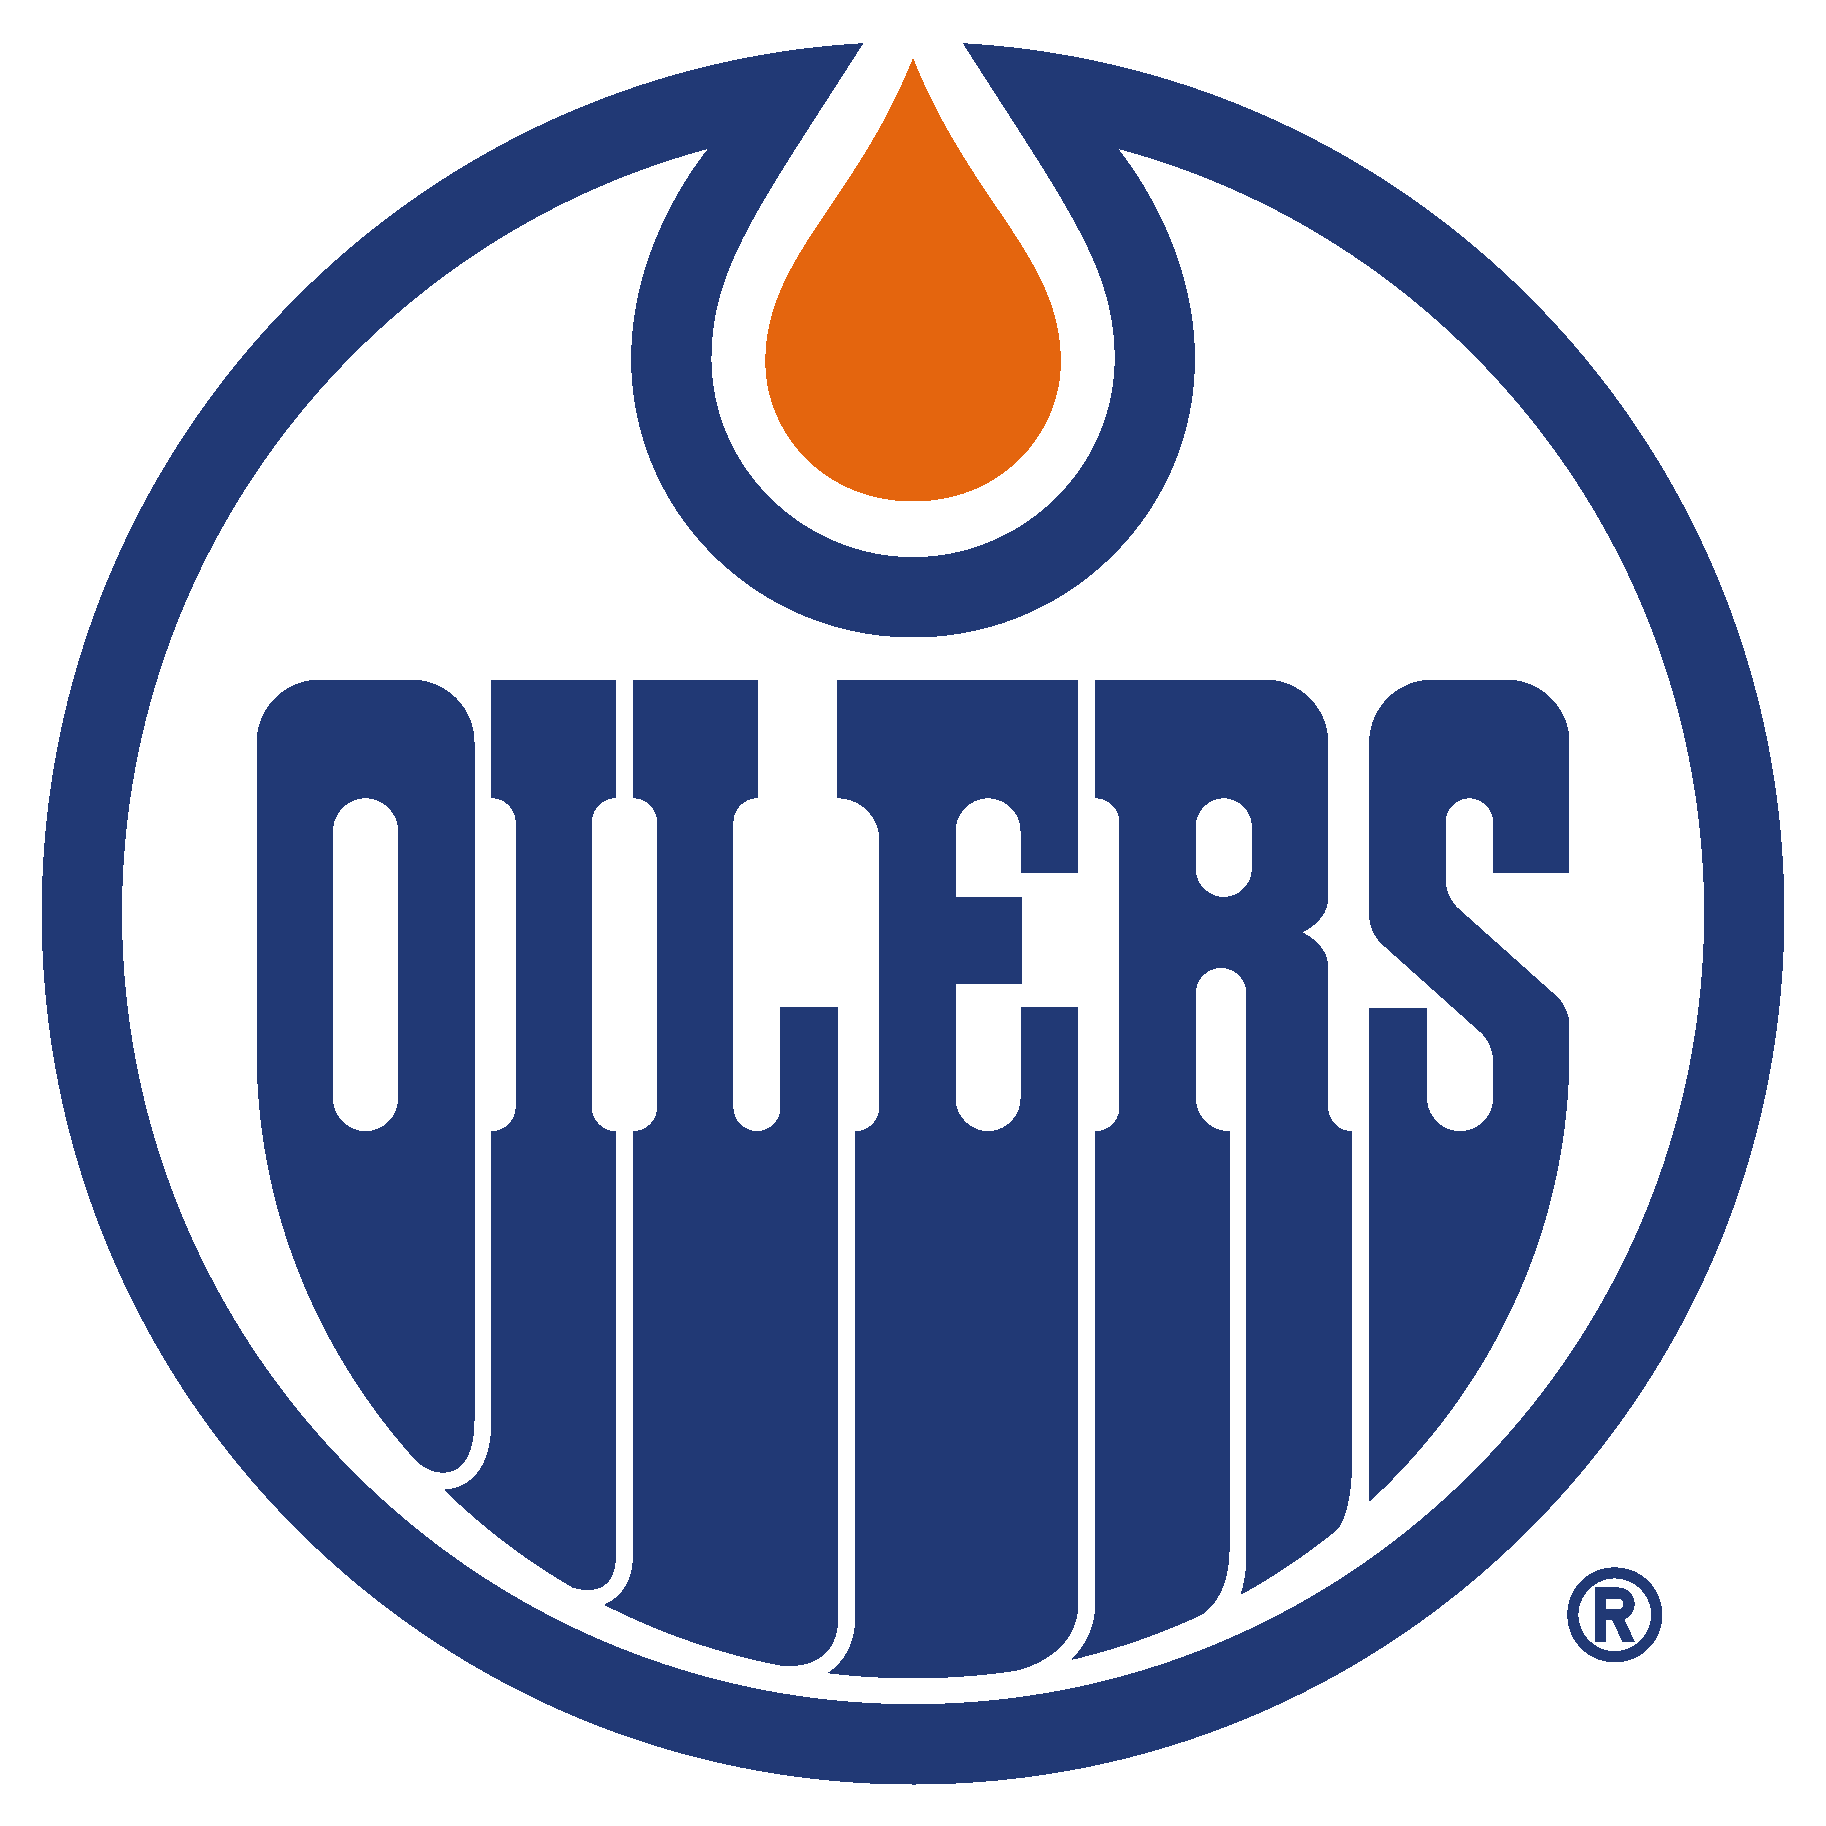 Edmonton Oilers Logo [EPS - NHL]